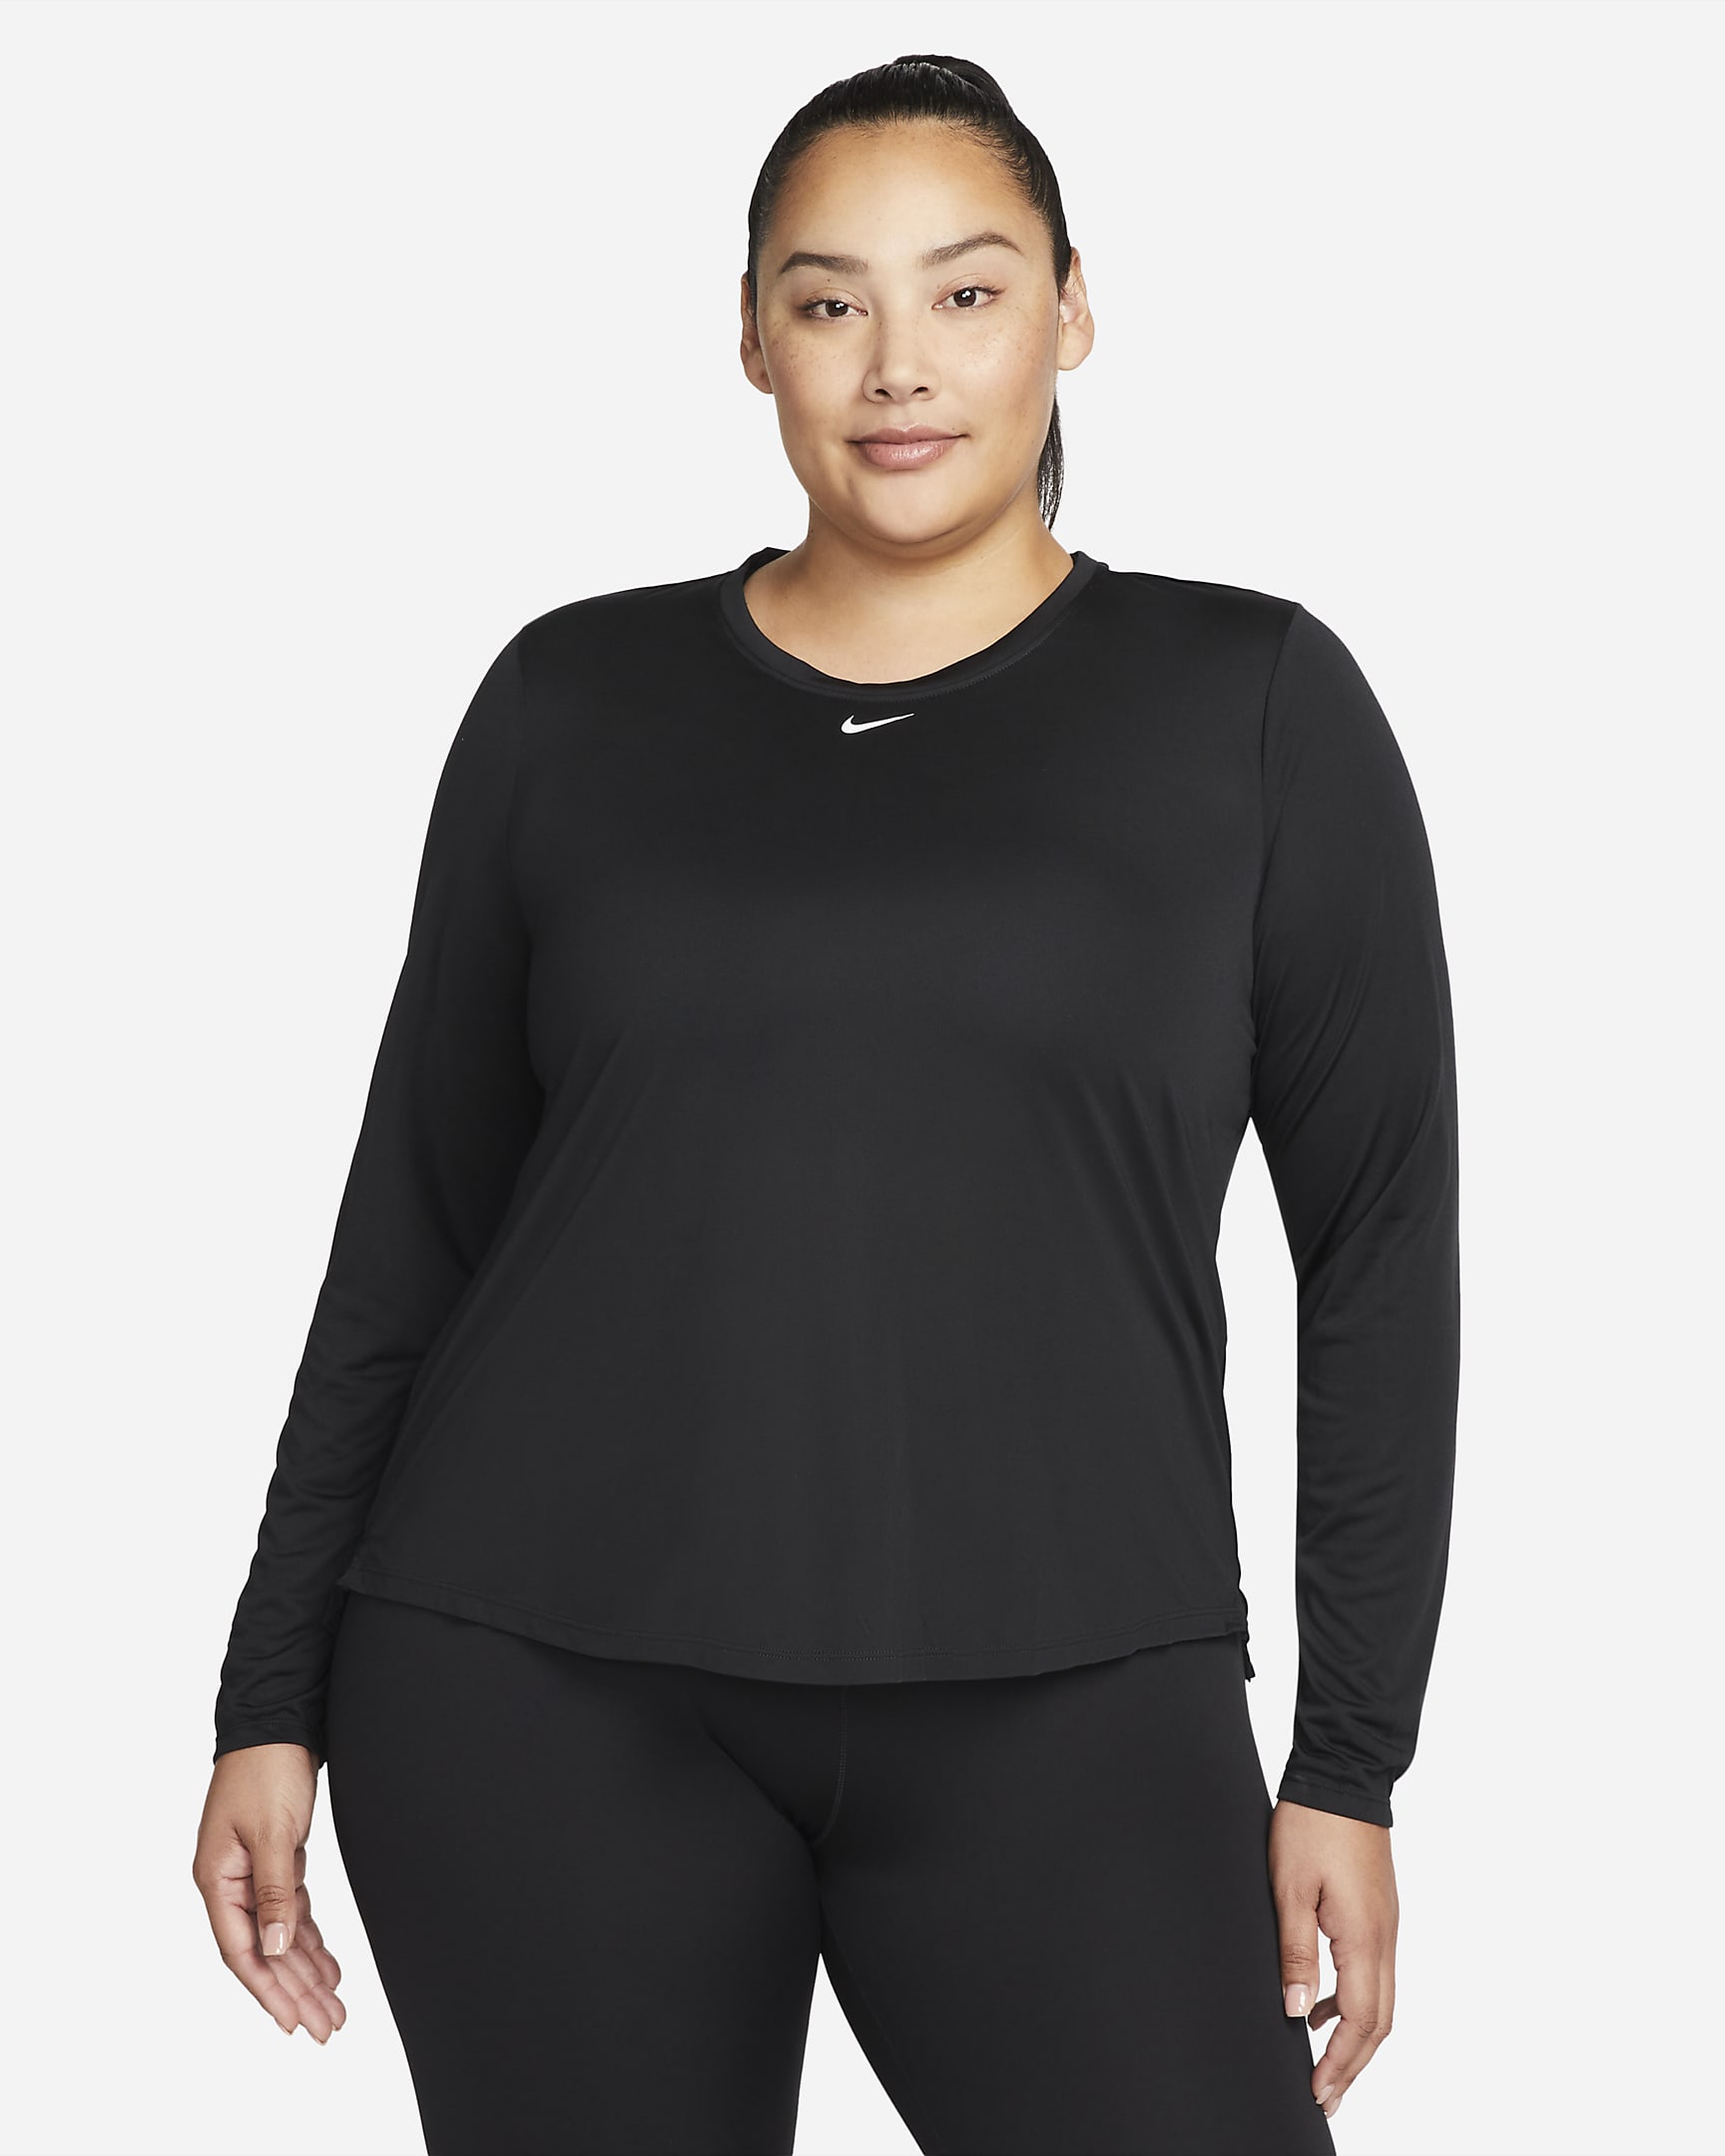 Nike Dri-FIT One Women's Standard Fit Long-Sleeve Top (Plus Size). Nike SG